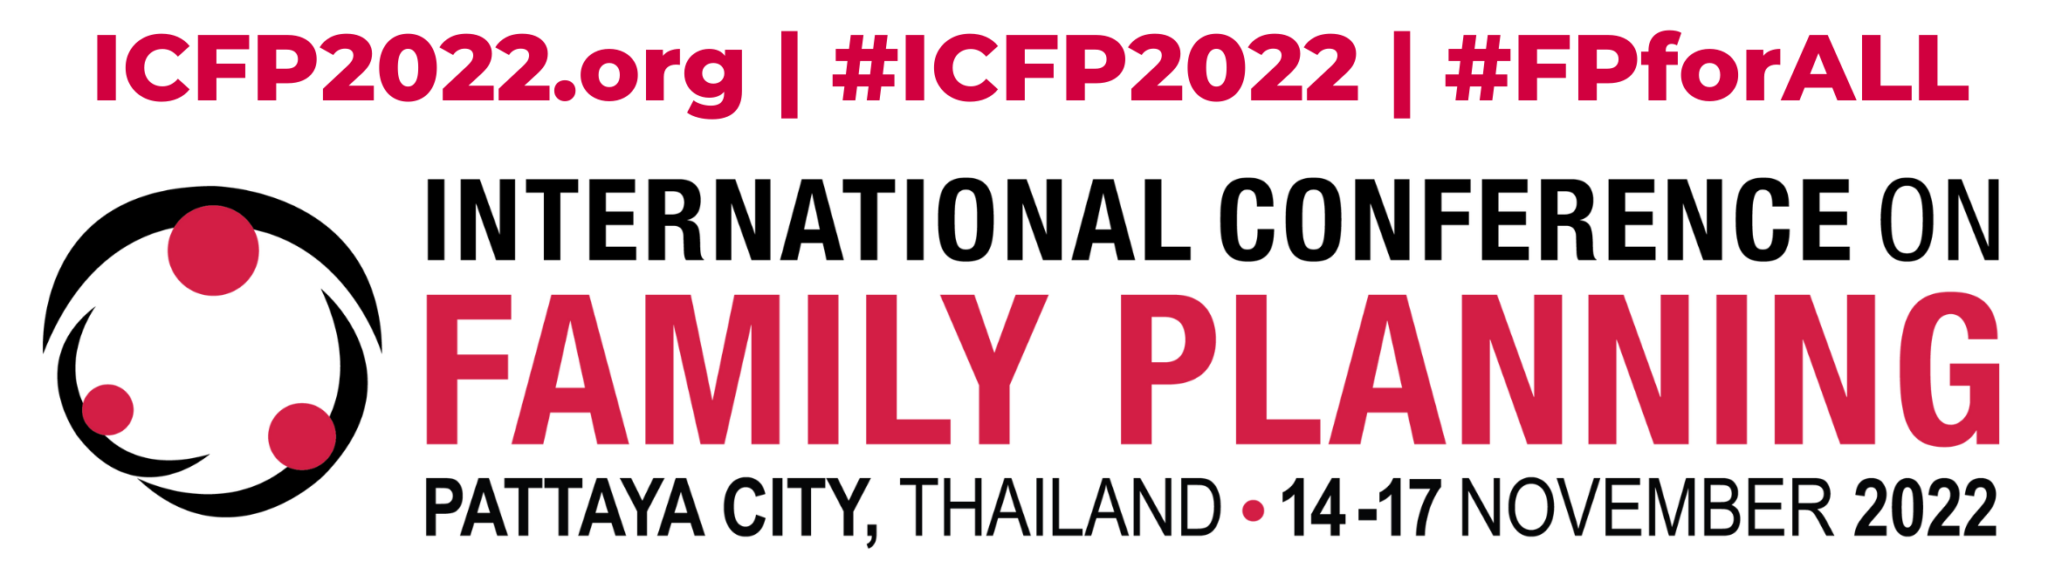 ICFP-Core-Organizing-Group-10